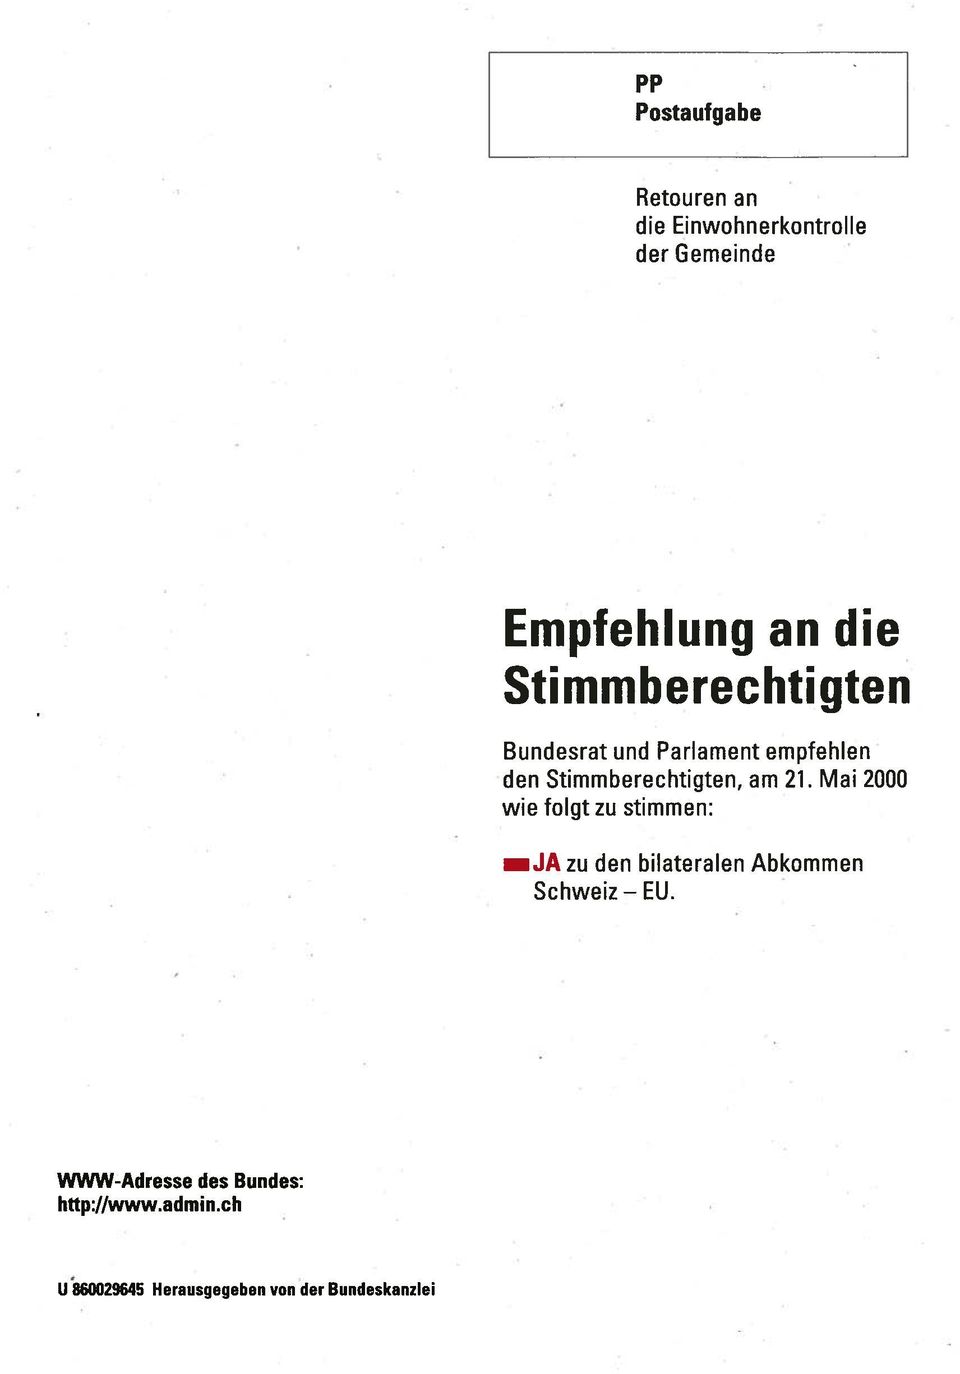 Mai 2000 wie folgt zu stimmen: JA zu den bilateralen Abkommen Schweiz EU.